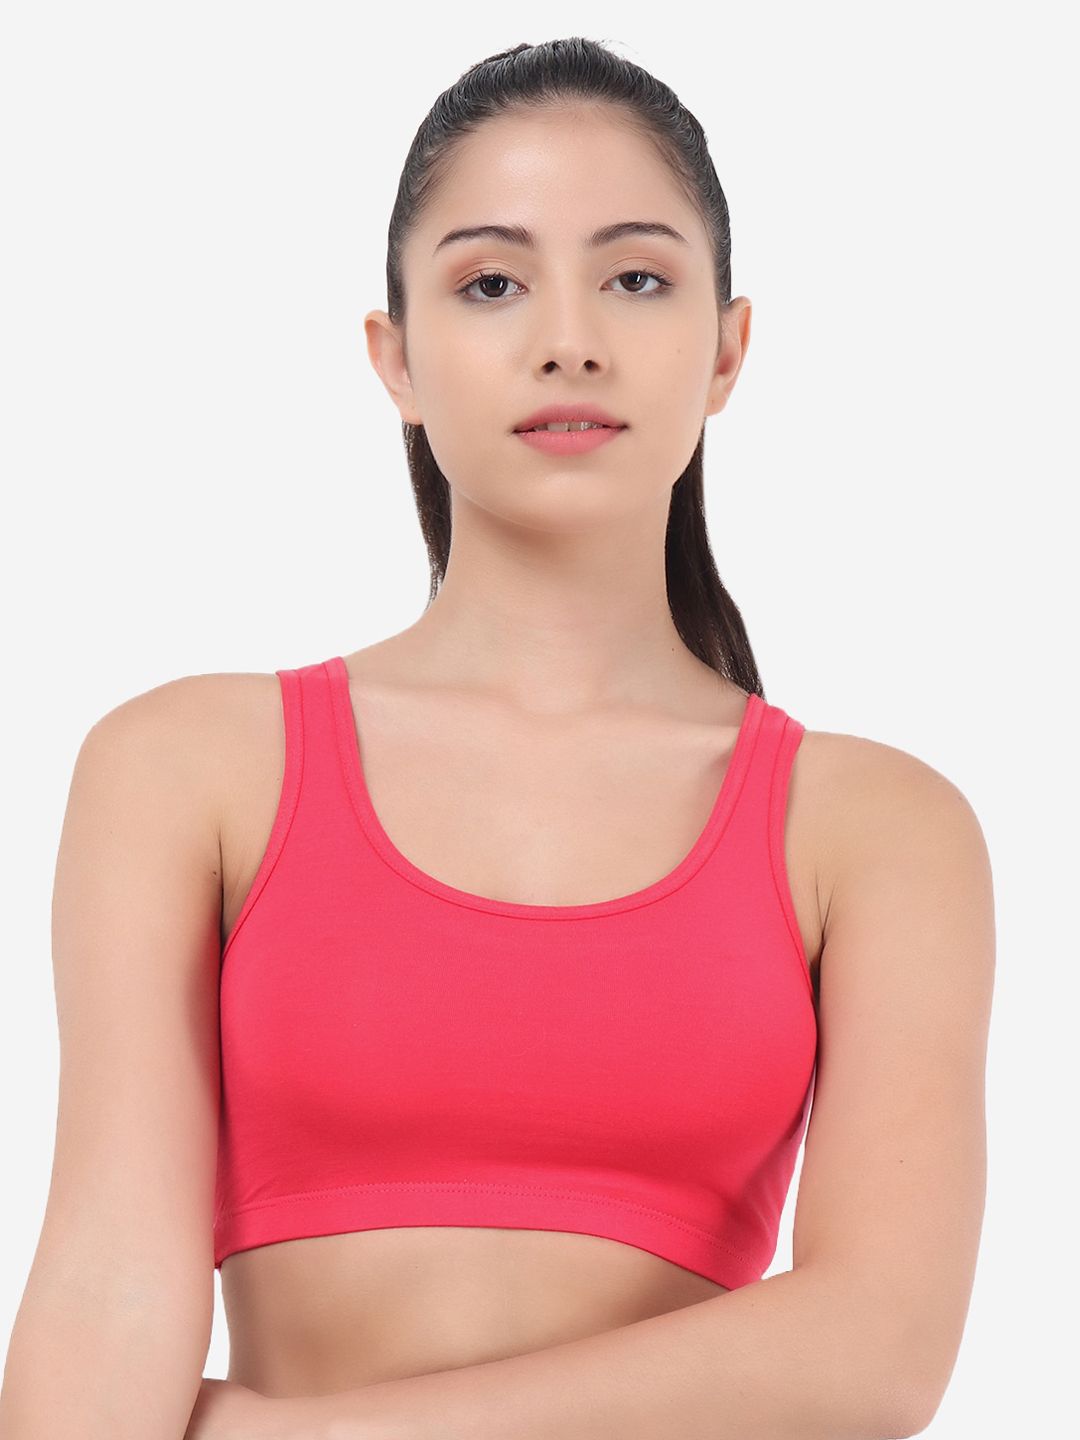 Evalona Pink Non Padded Begineers Sports Bra Price in India